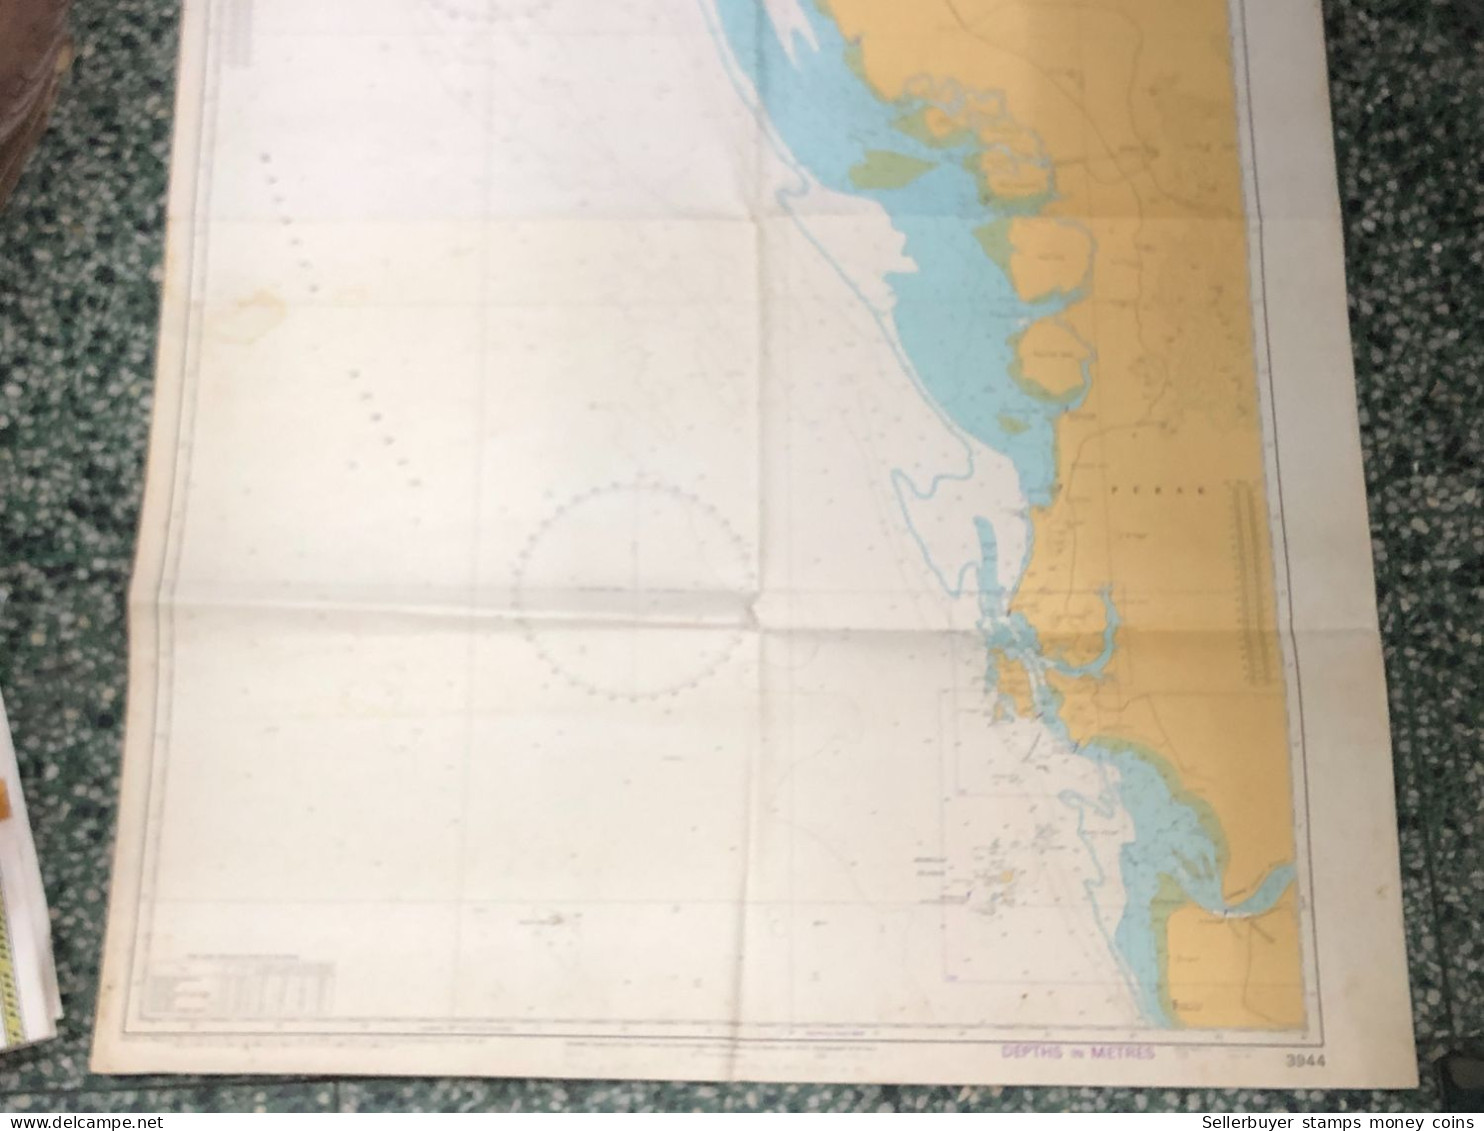 World Maps Old-malacca Strart Malau Penang Sembilan Islands 1969 Before 1975-1 Pcs - Cartes Topographiques